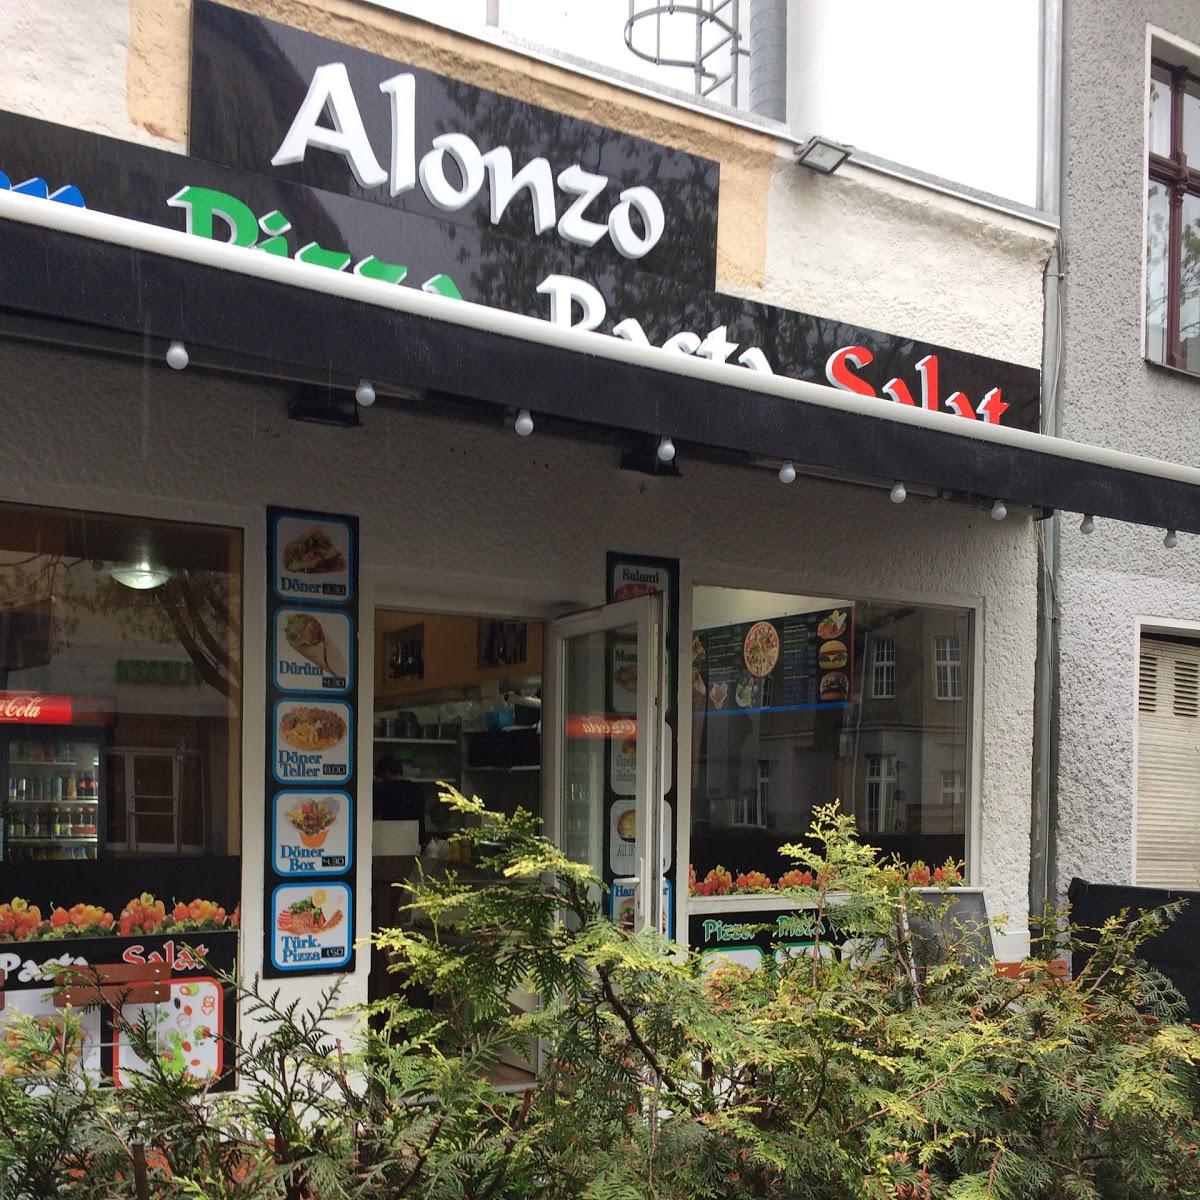 Restaurant "Pizzeria Alonzo" in  Berlin